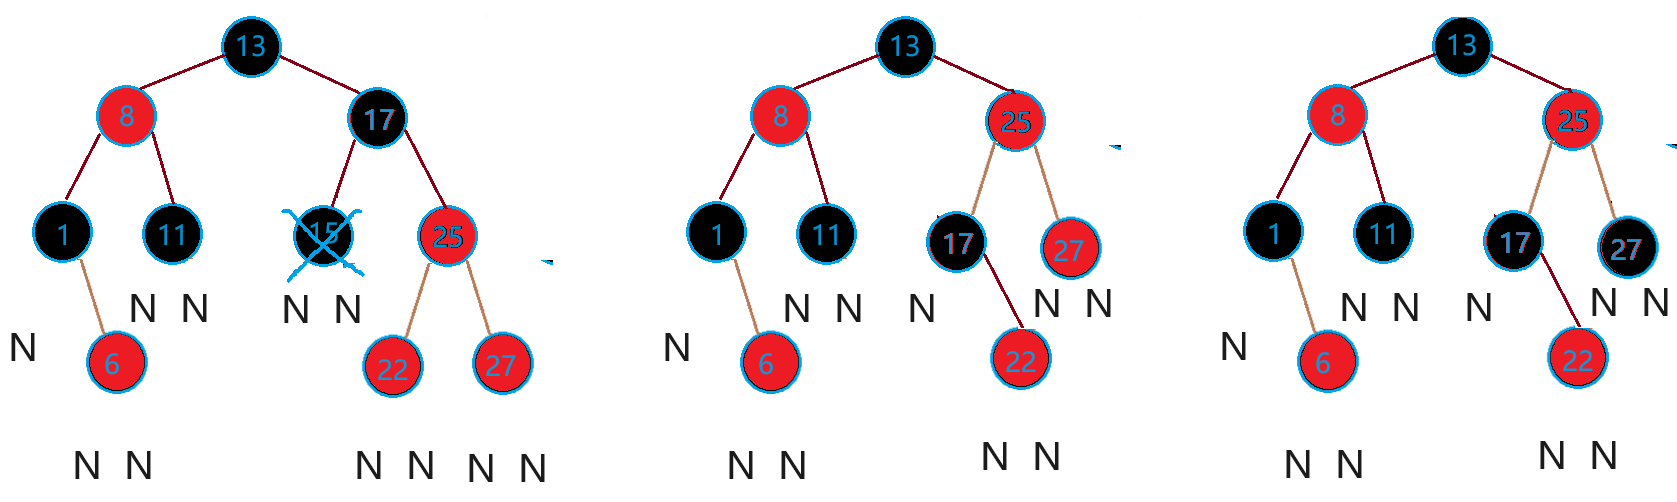 c++ 红黑树学习及简单实现